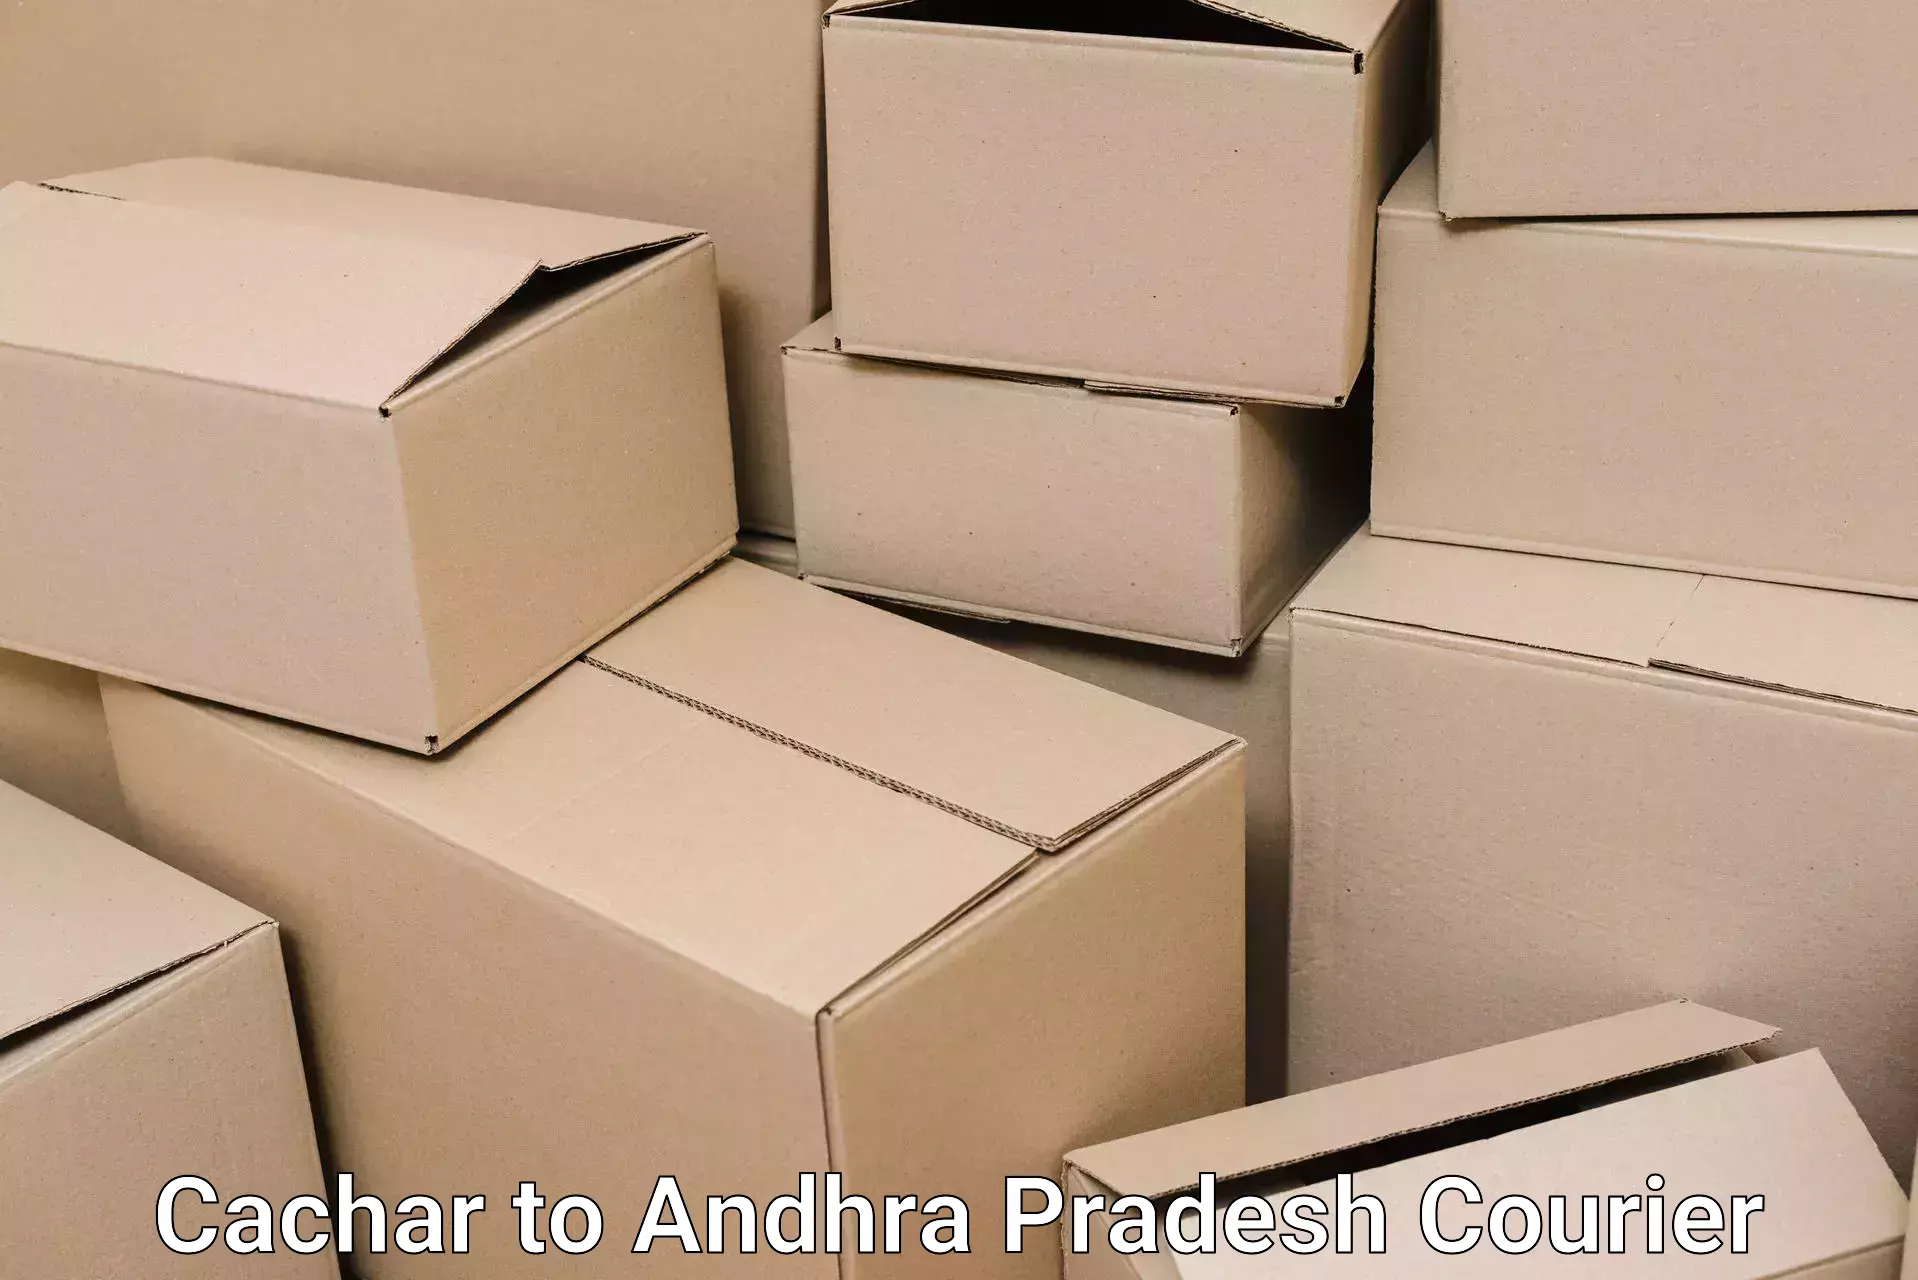 Furniture moving plans Cachar to Chandragiri